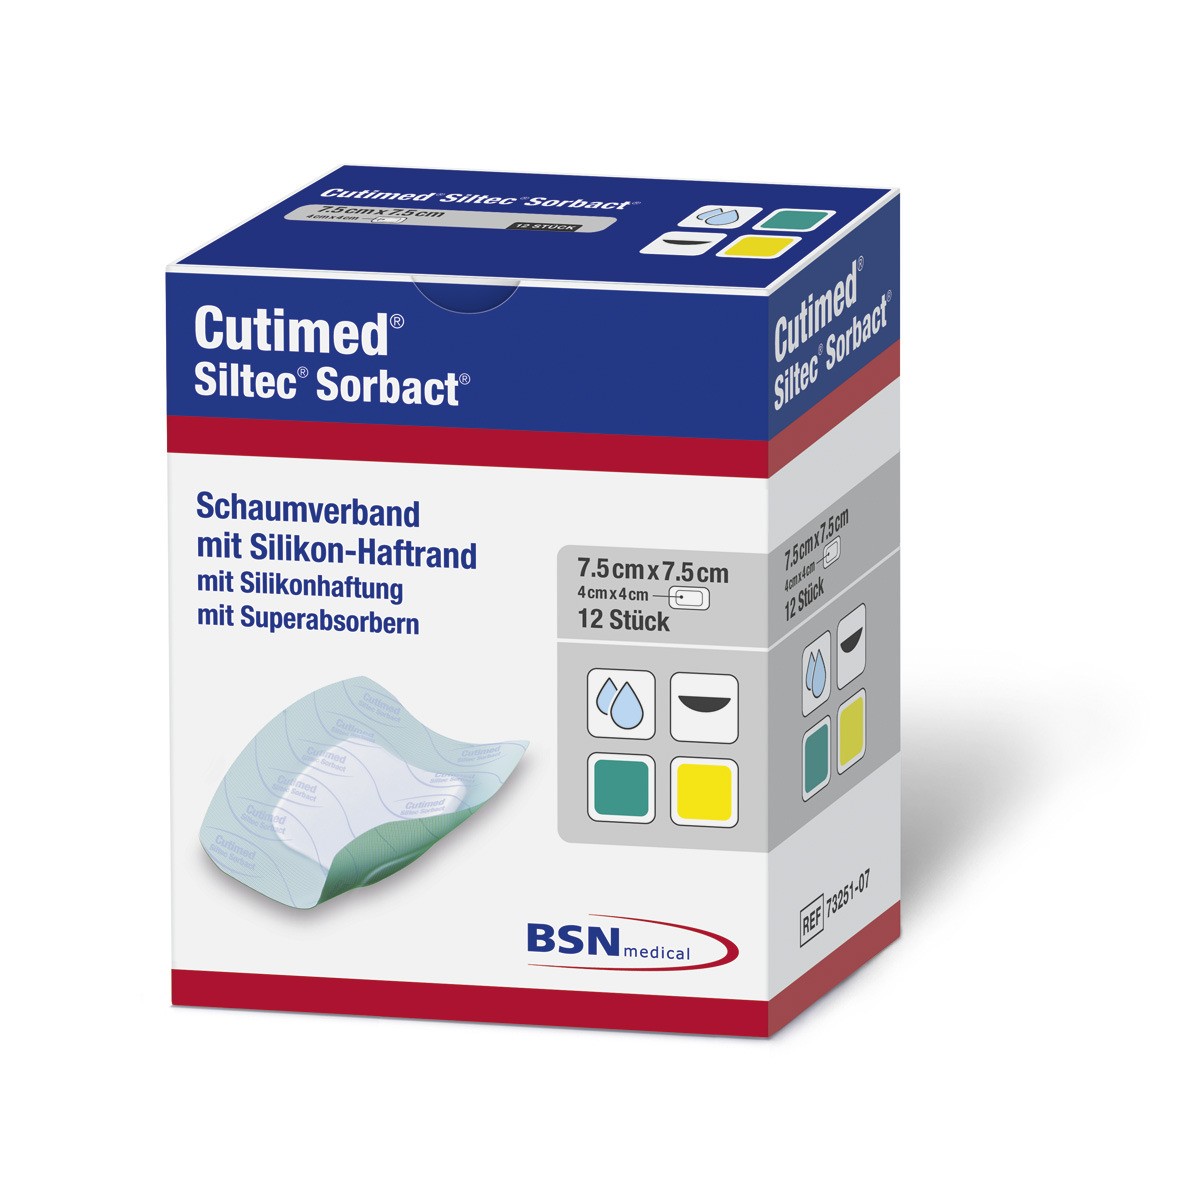 Cutimed® Siltec Sorbact Schaumverband 7,5cm x 7,5cm / 12 Stk